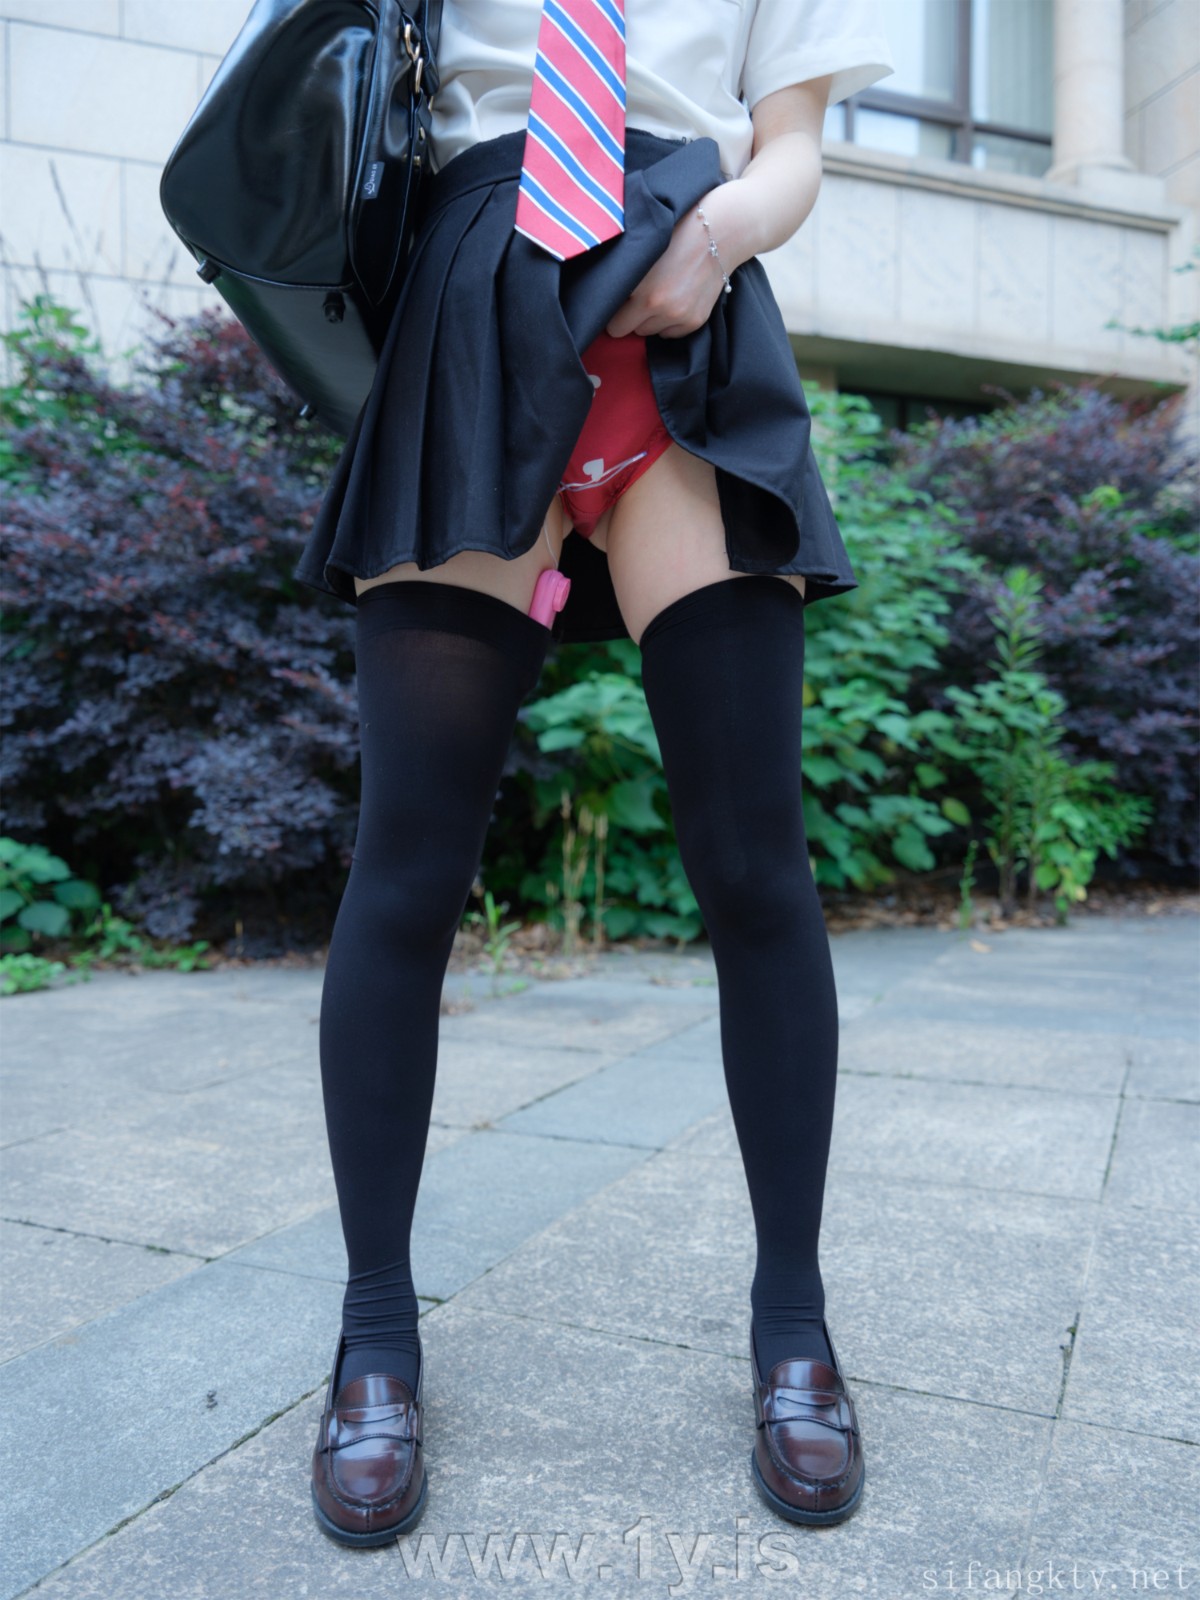 The Tender girl in black stockings Outdoor Exposure-1 (6)